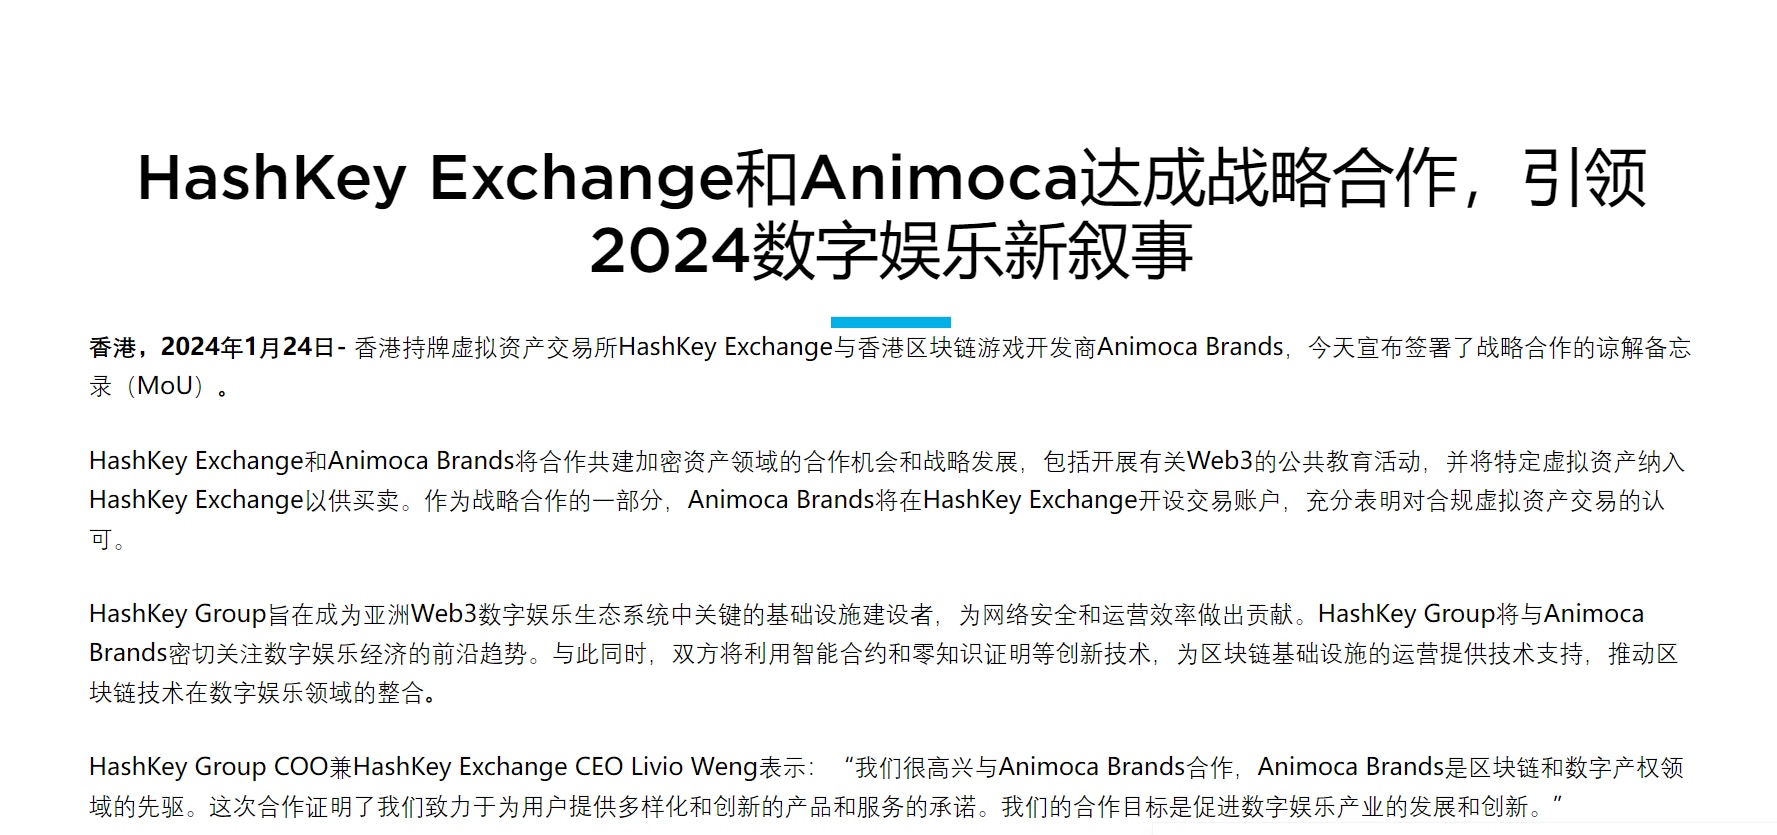 HashKey Exchange 和Animoca 合作將共同推動數字娛樂領域發展